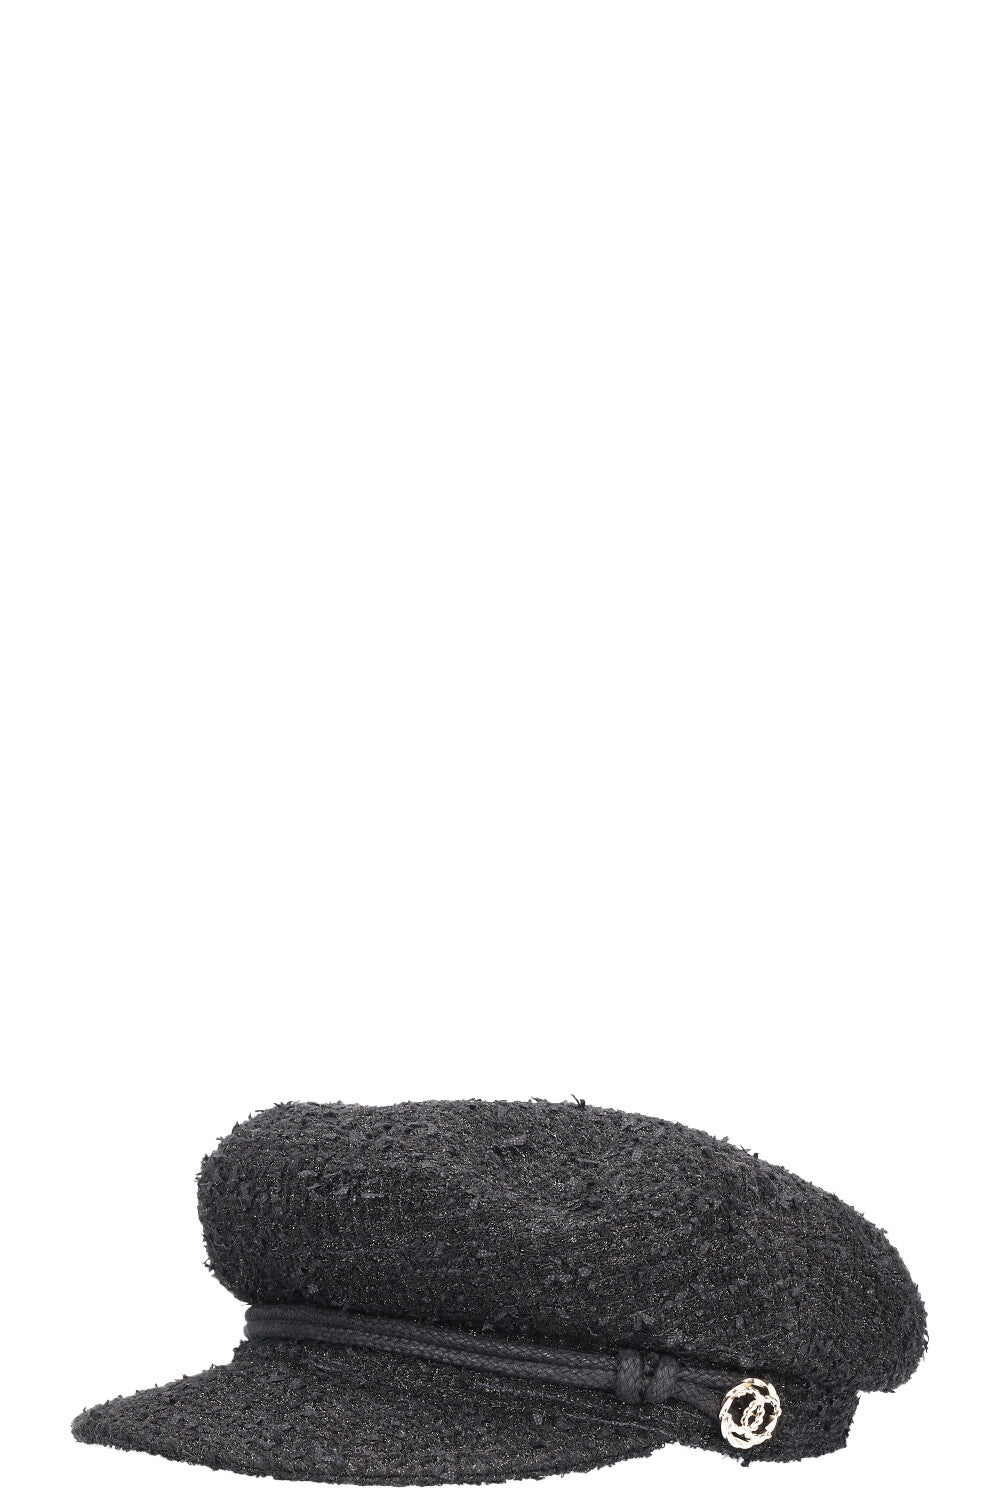 CHANEL Tweed Hat Black